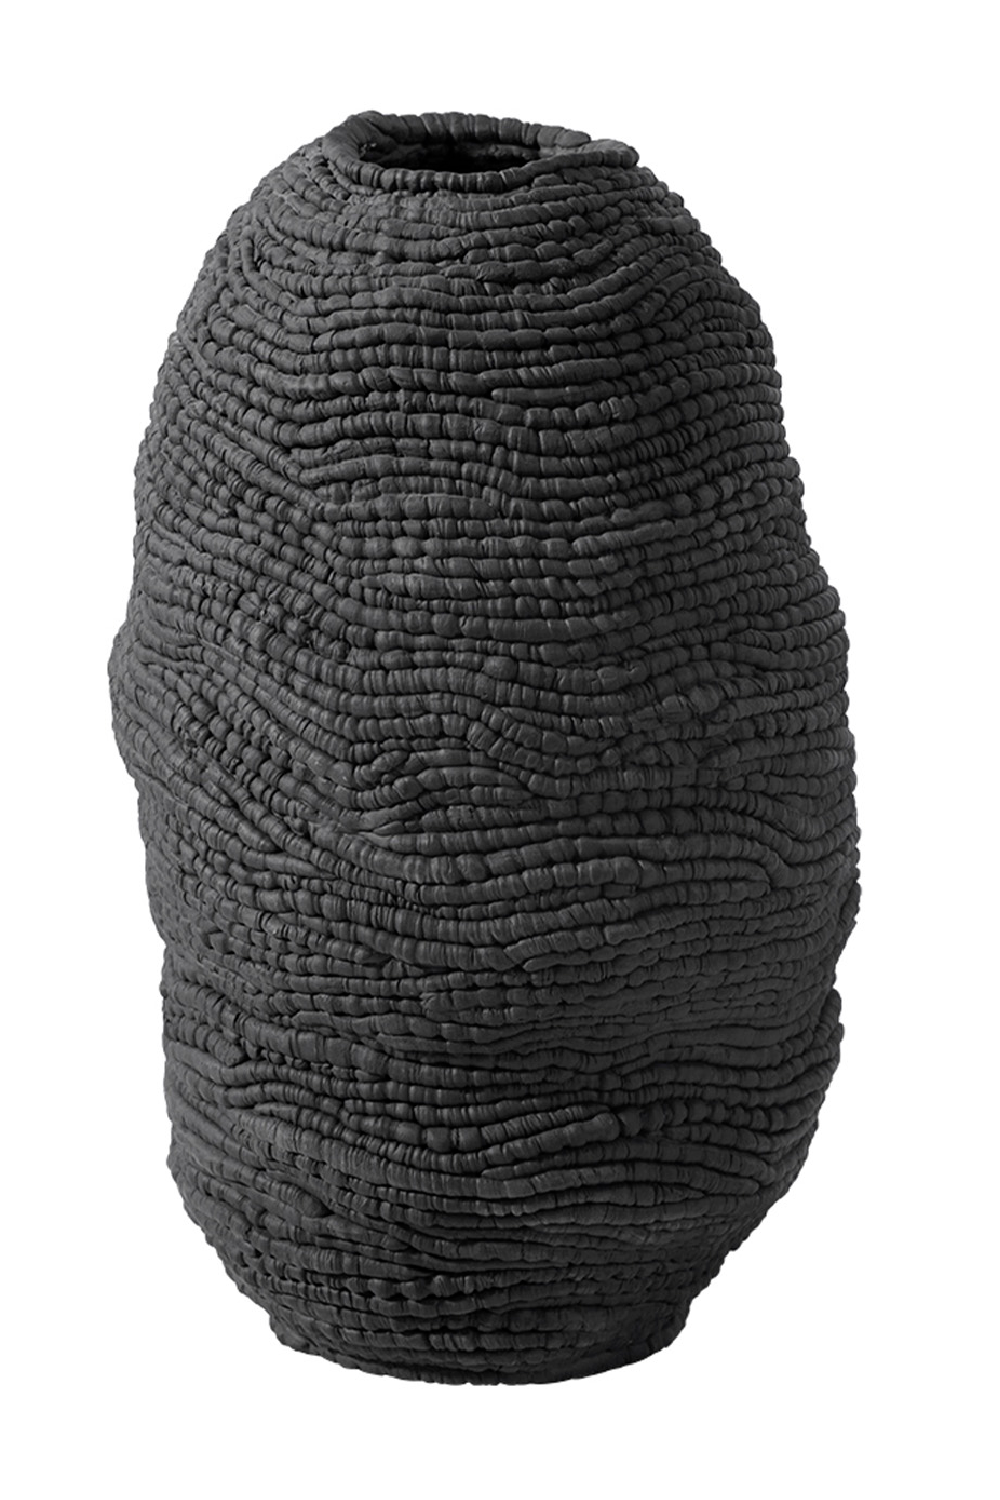 Textured Black Ceramic Vase | Liang & Eimil Micah II | OROA.com